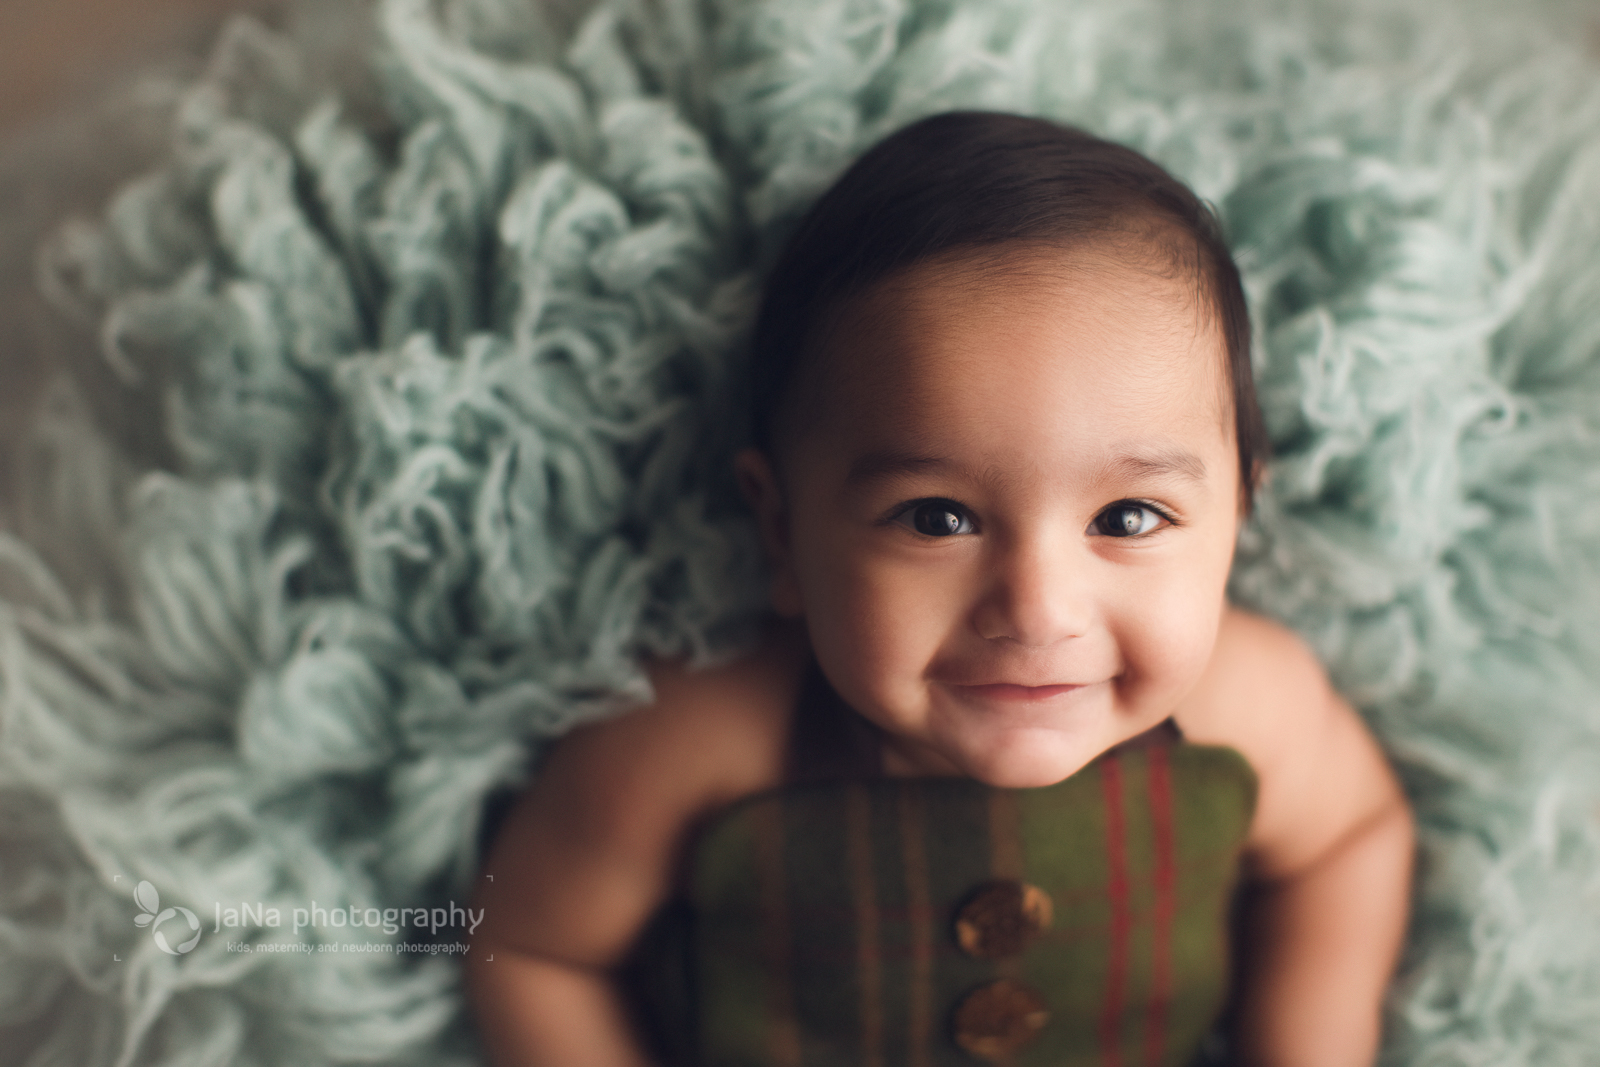 Surrey baby photography | Manfateh